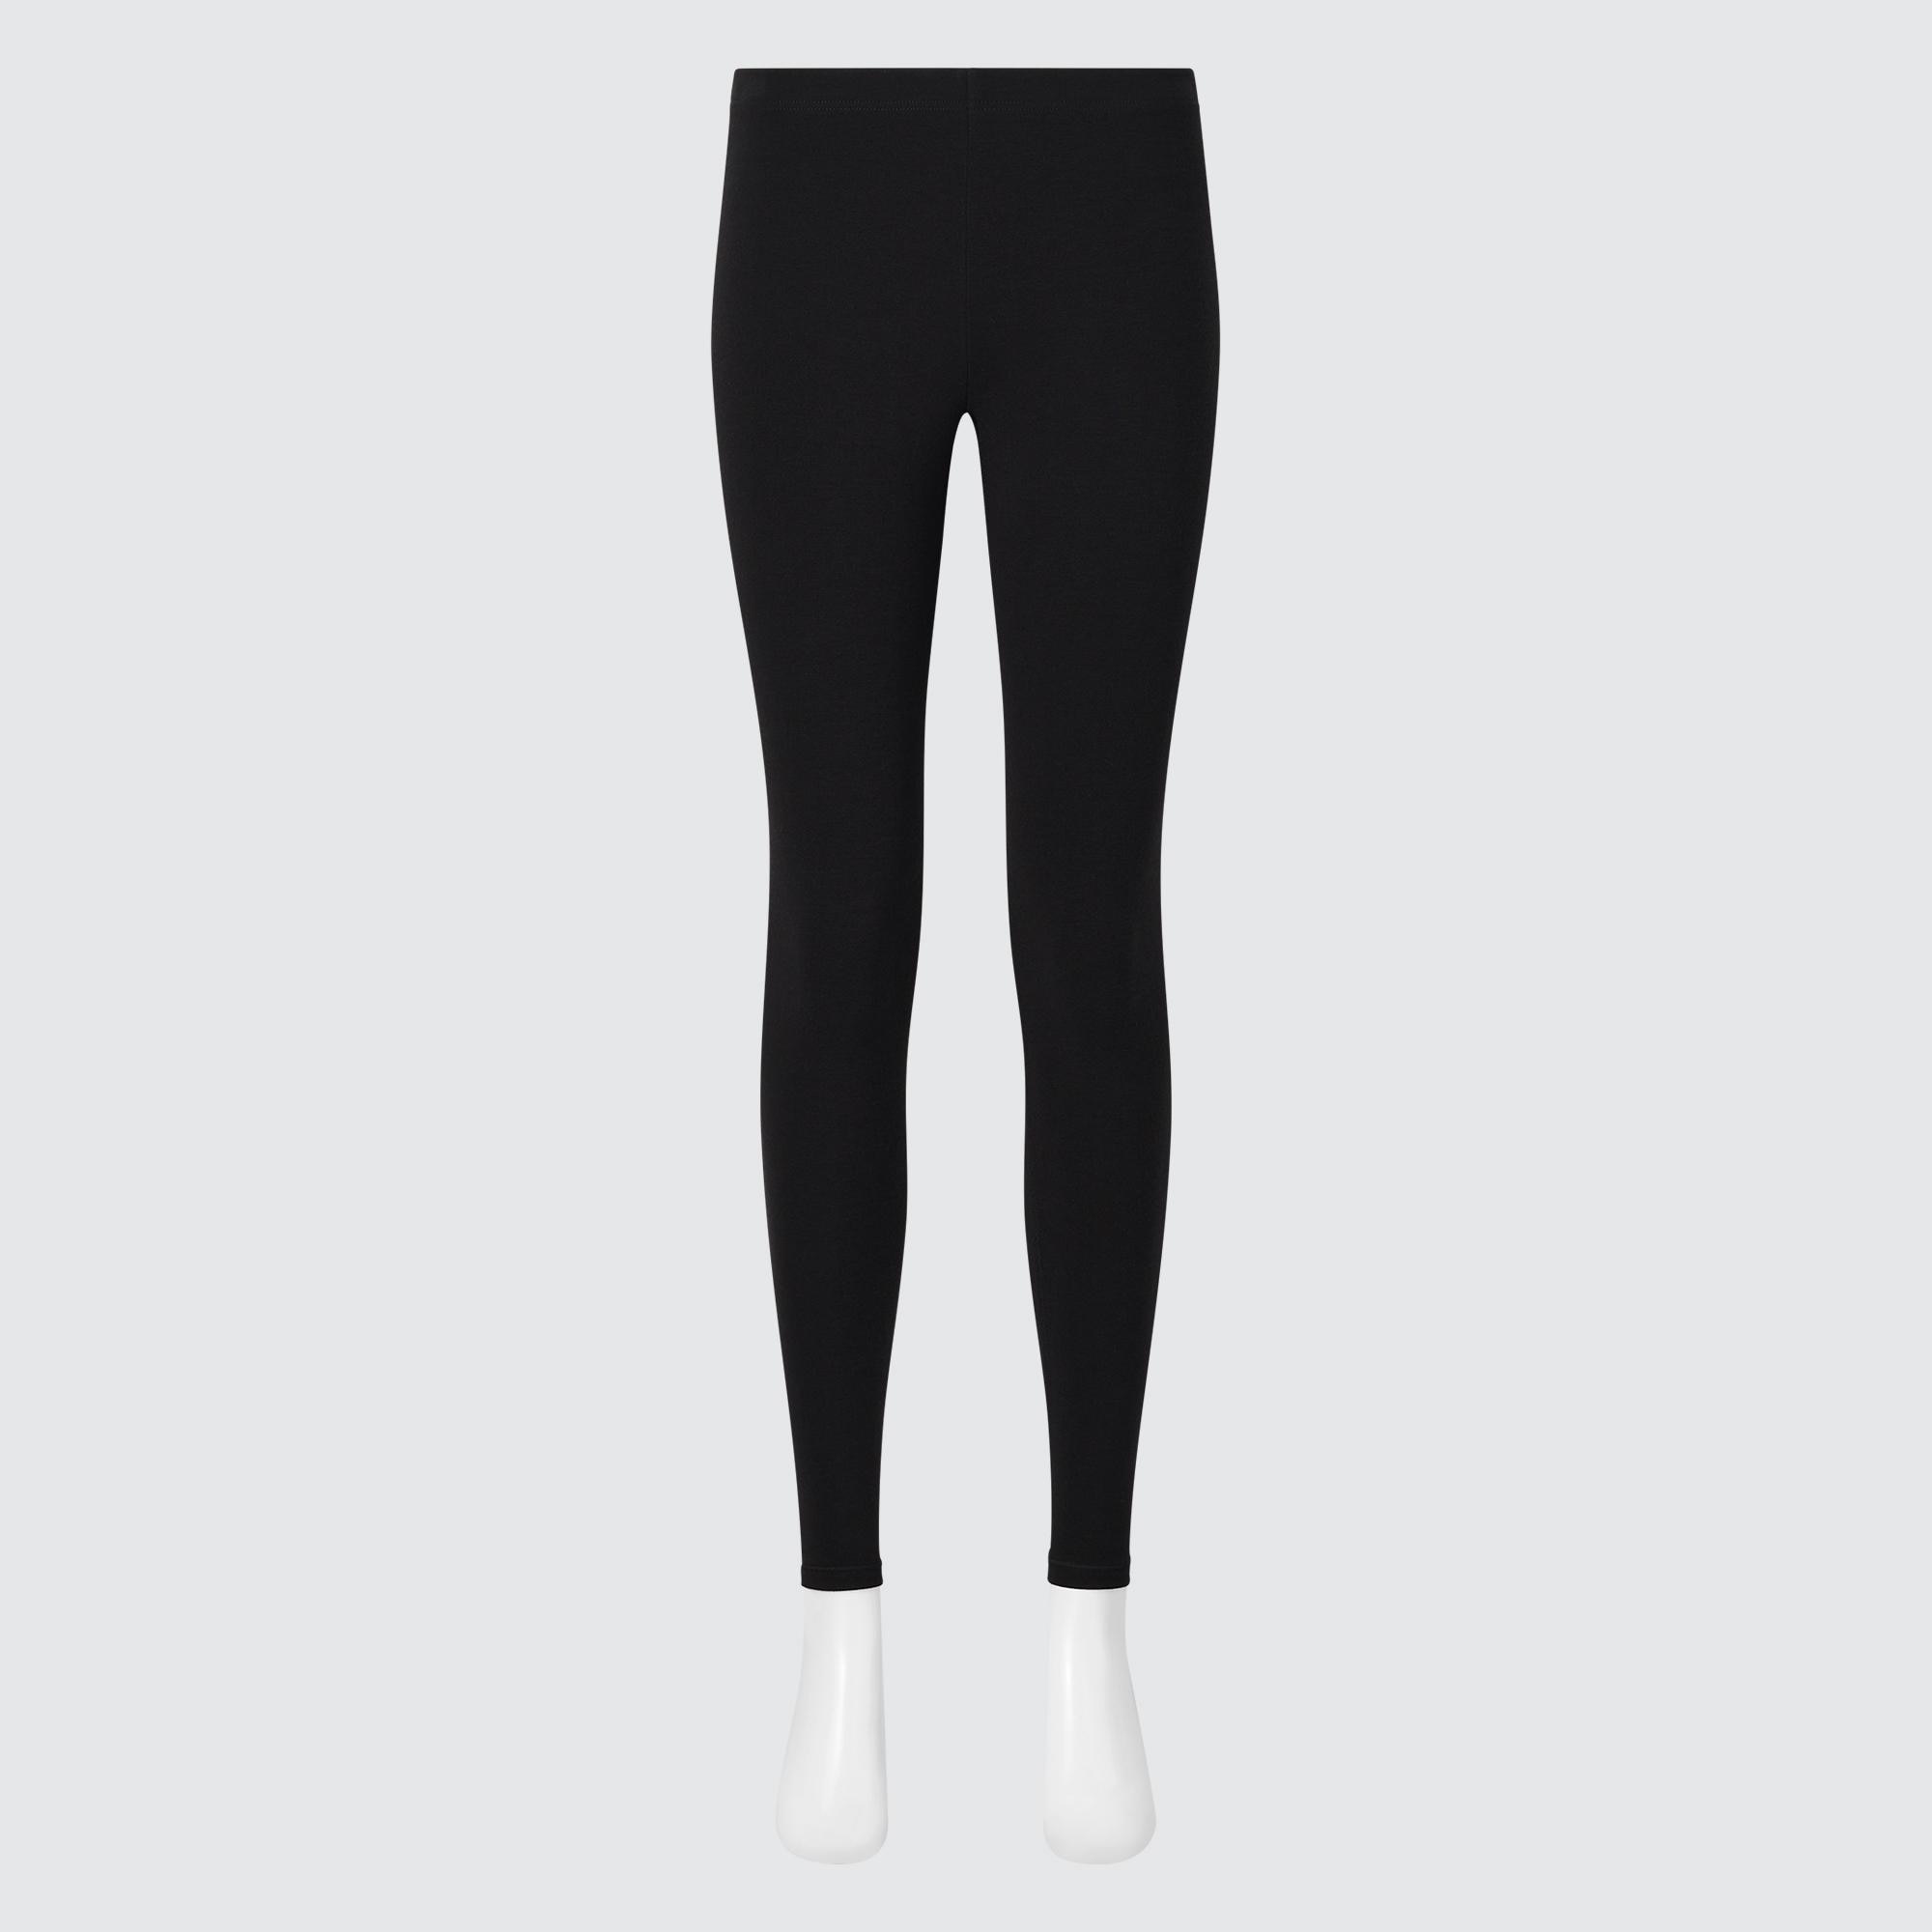 Uniqlo, Pants & Jumpsuits, Nwt Uniqlo Heattech Ultra Stretch Highrise Leggings  Pants